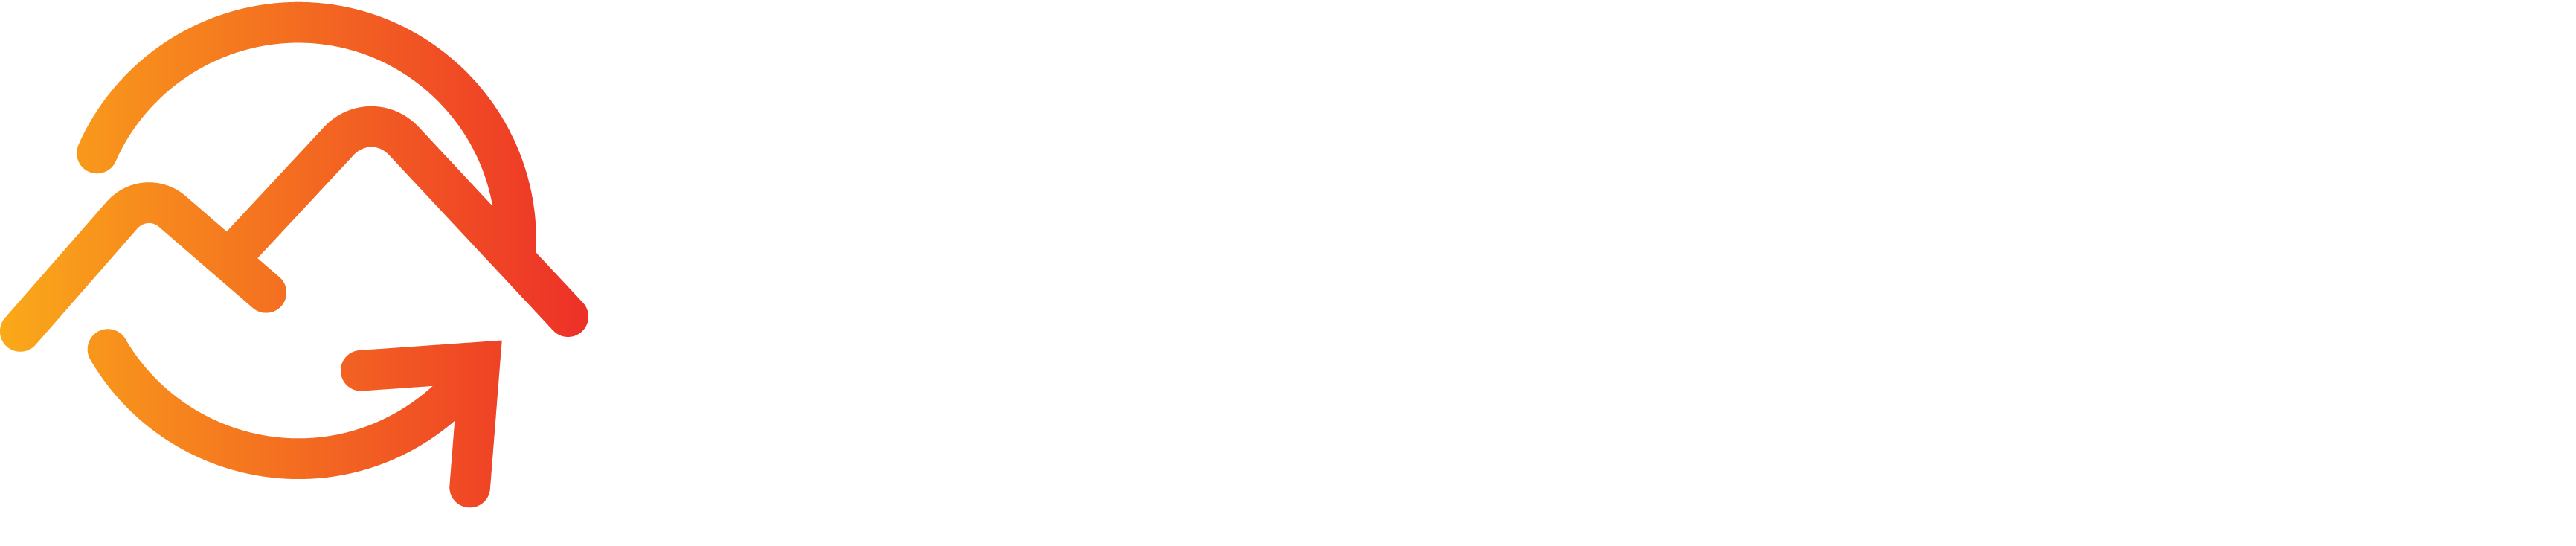 bulkbookers-logo-wit-rgb-slogan_Tekengebied 1